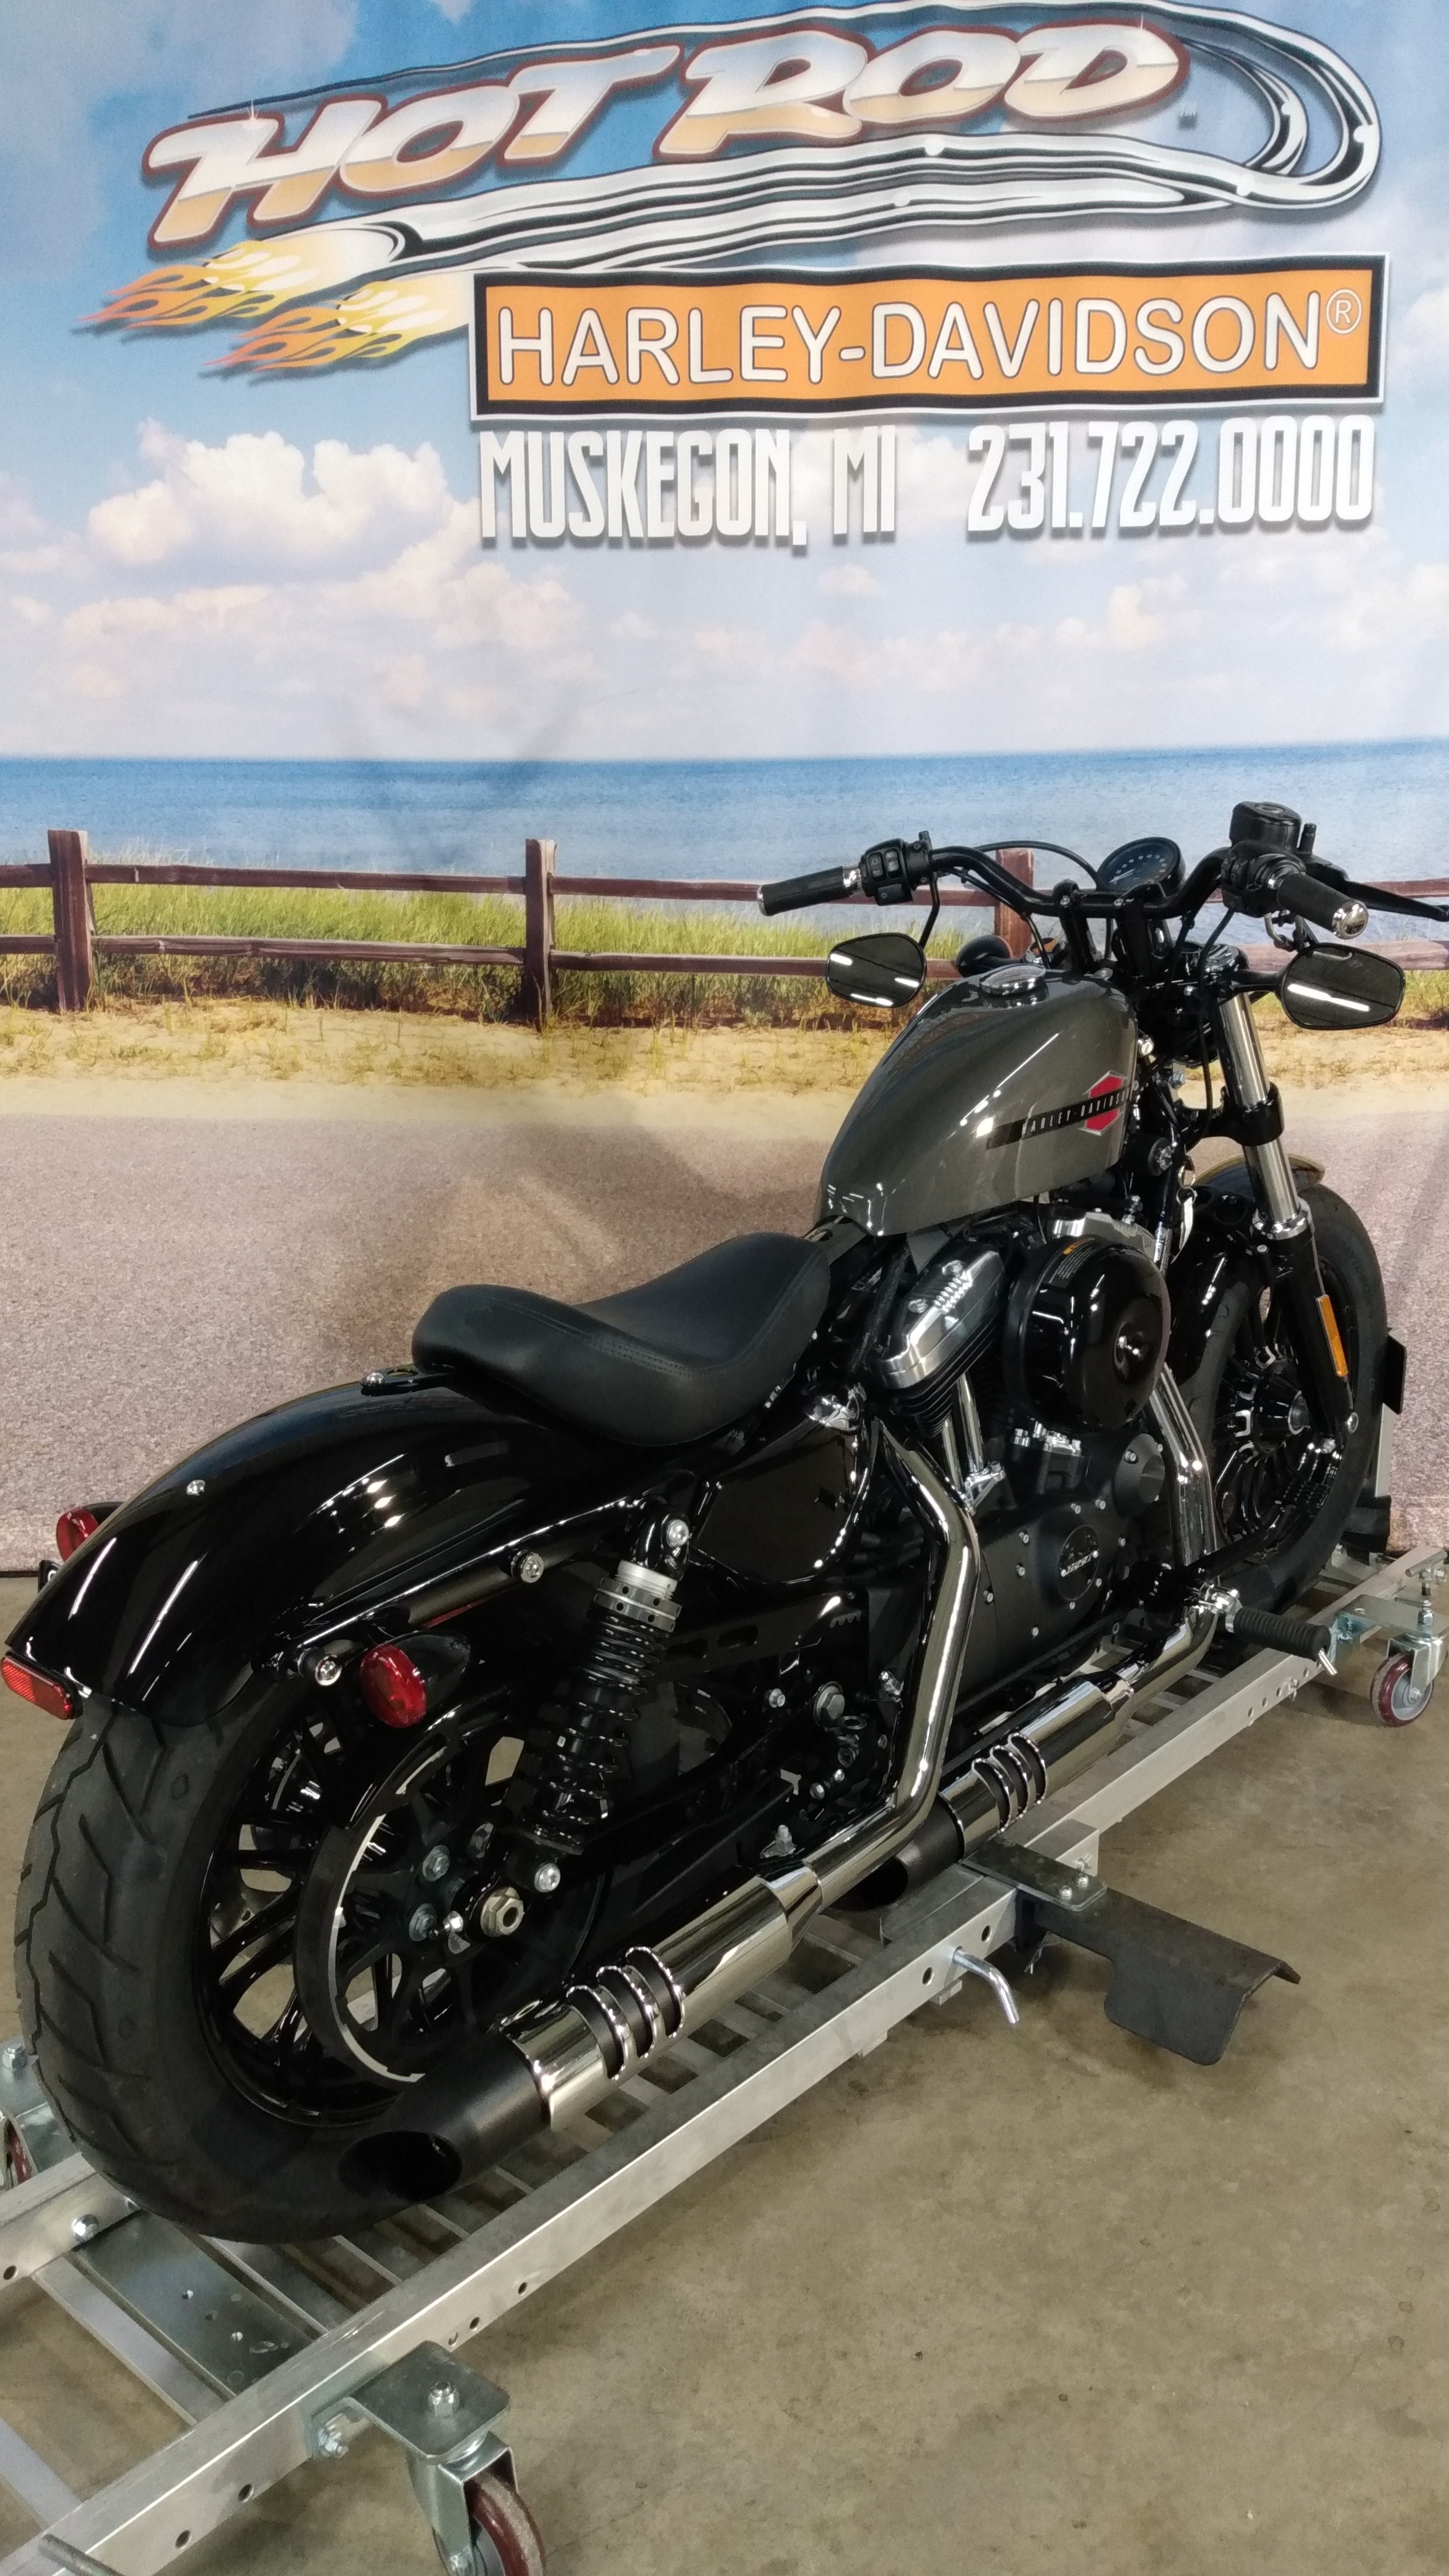 2019 Harley-Davidson Sportster Forty-Eight at Hot Rod Harley-Davidson